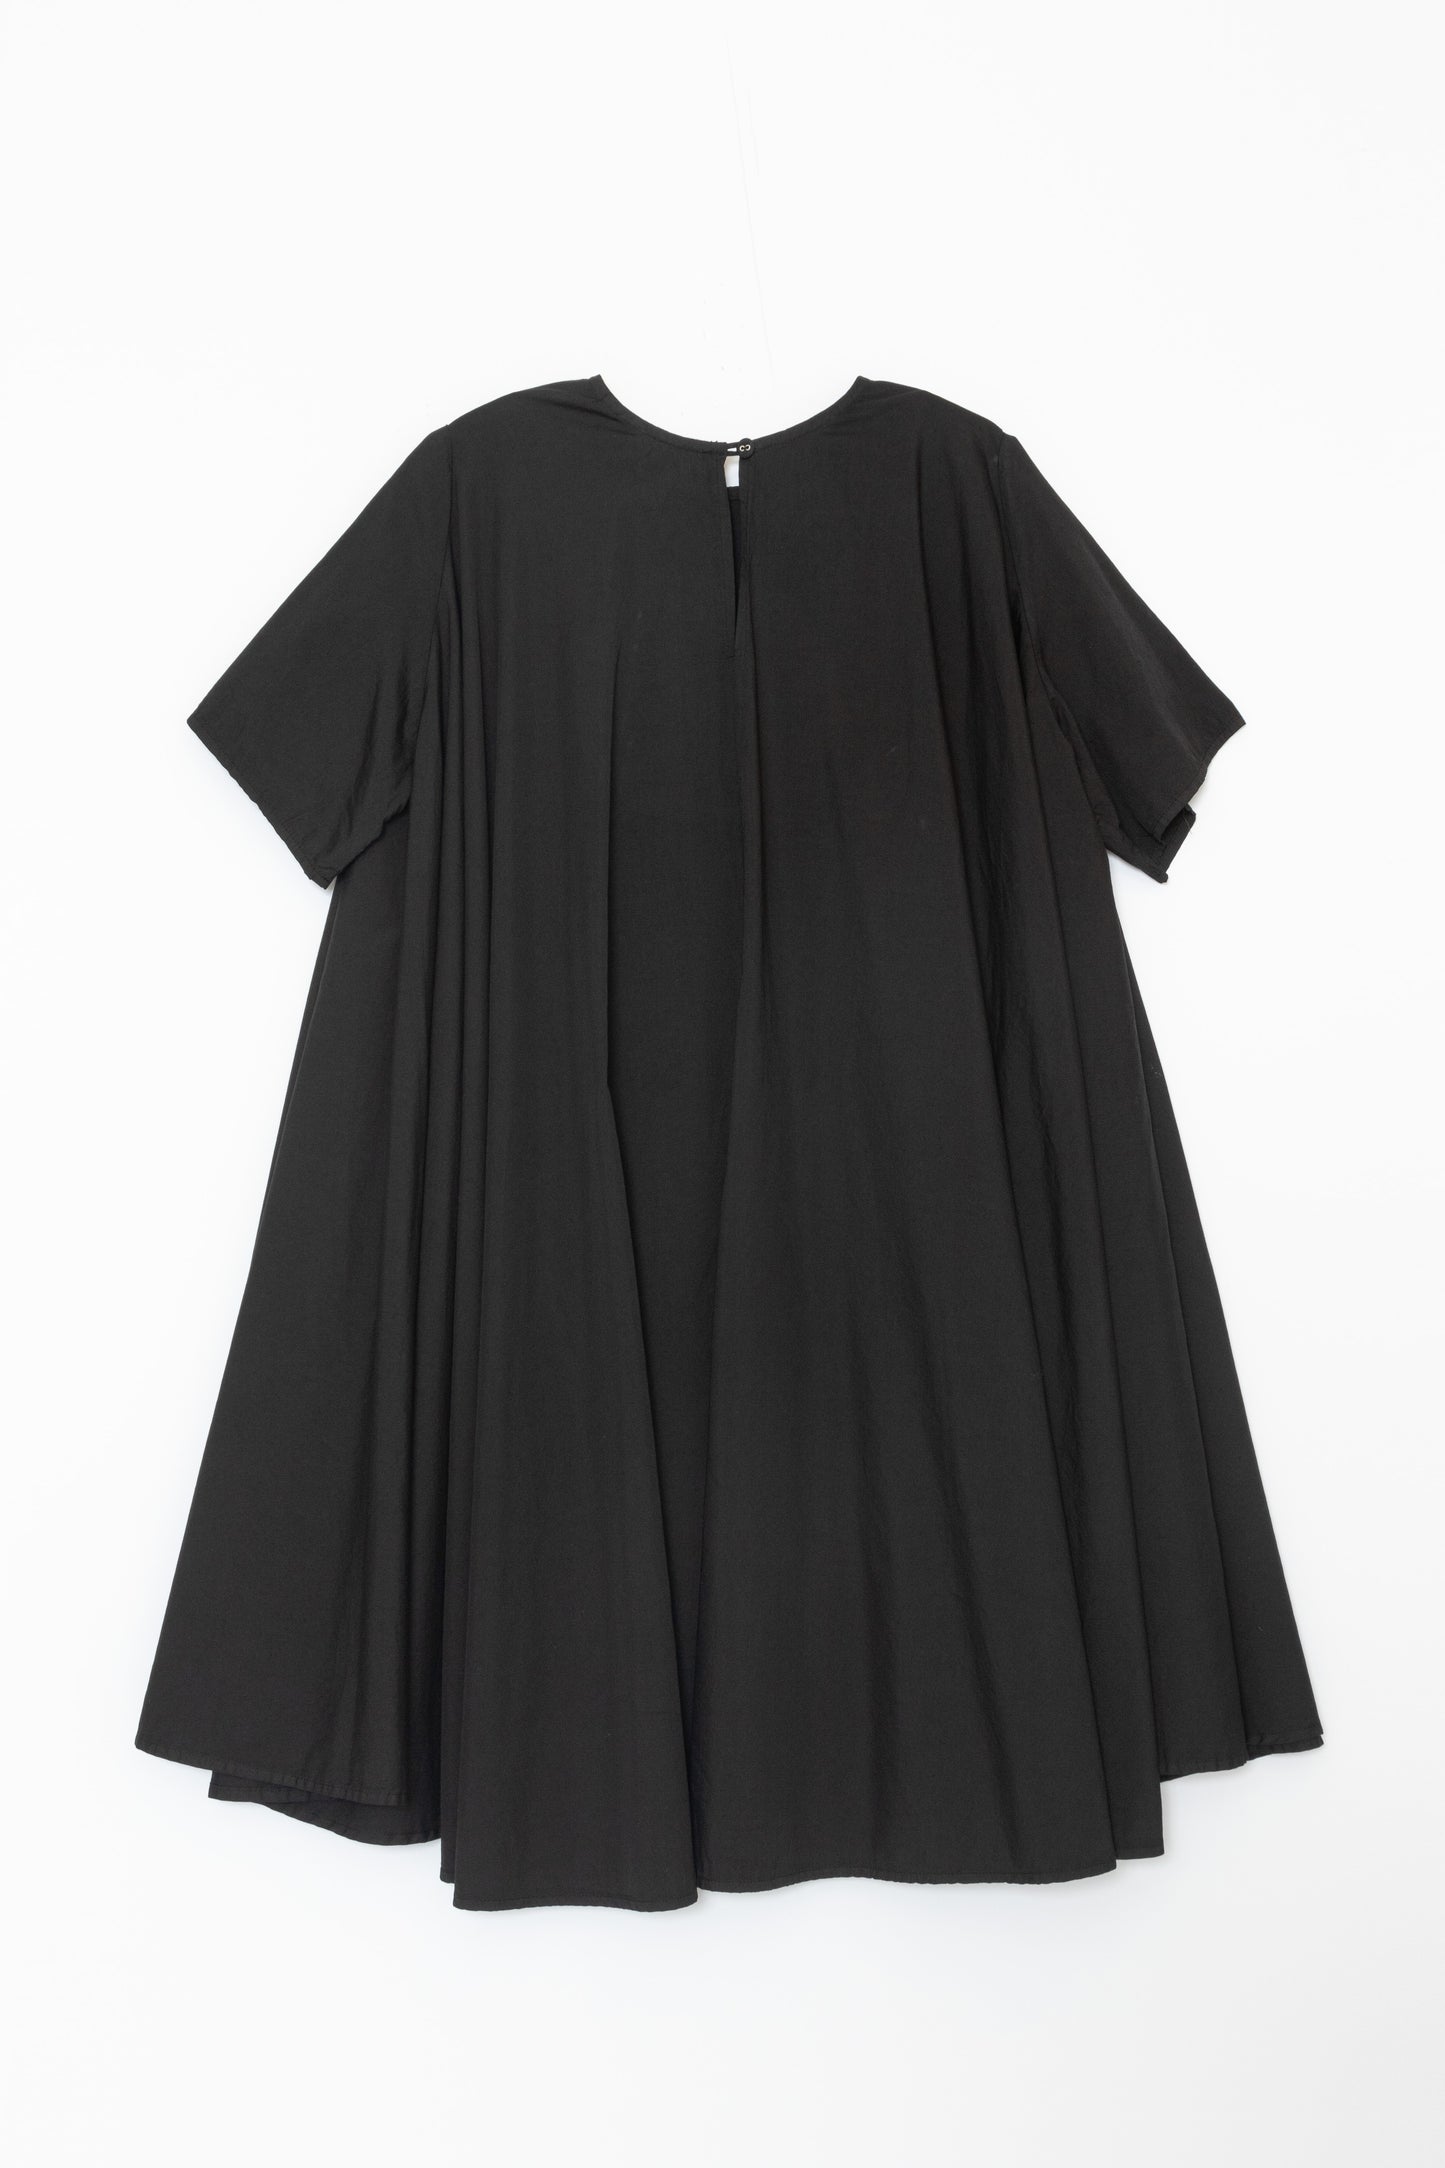 [Whiteread] Dress 15 - Ebony